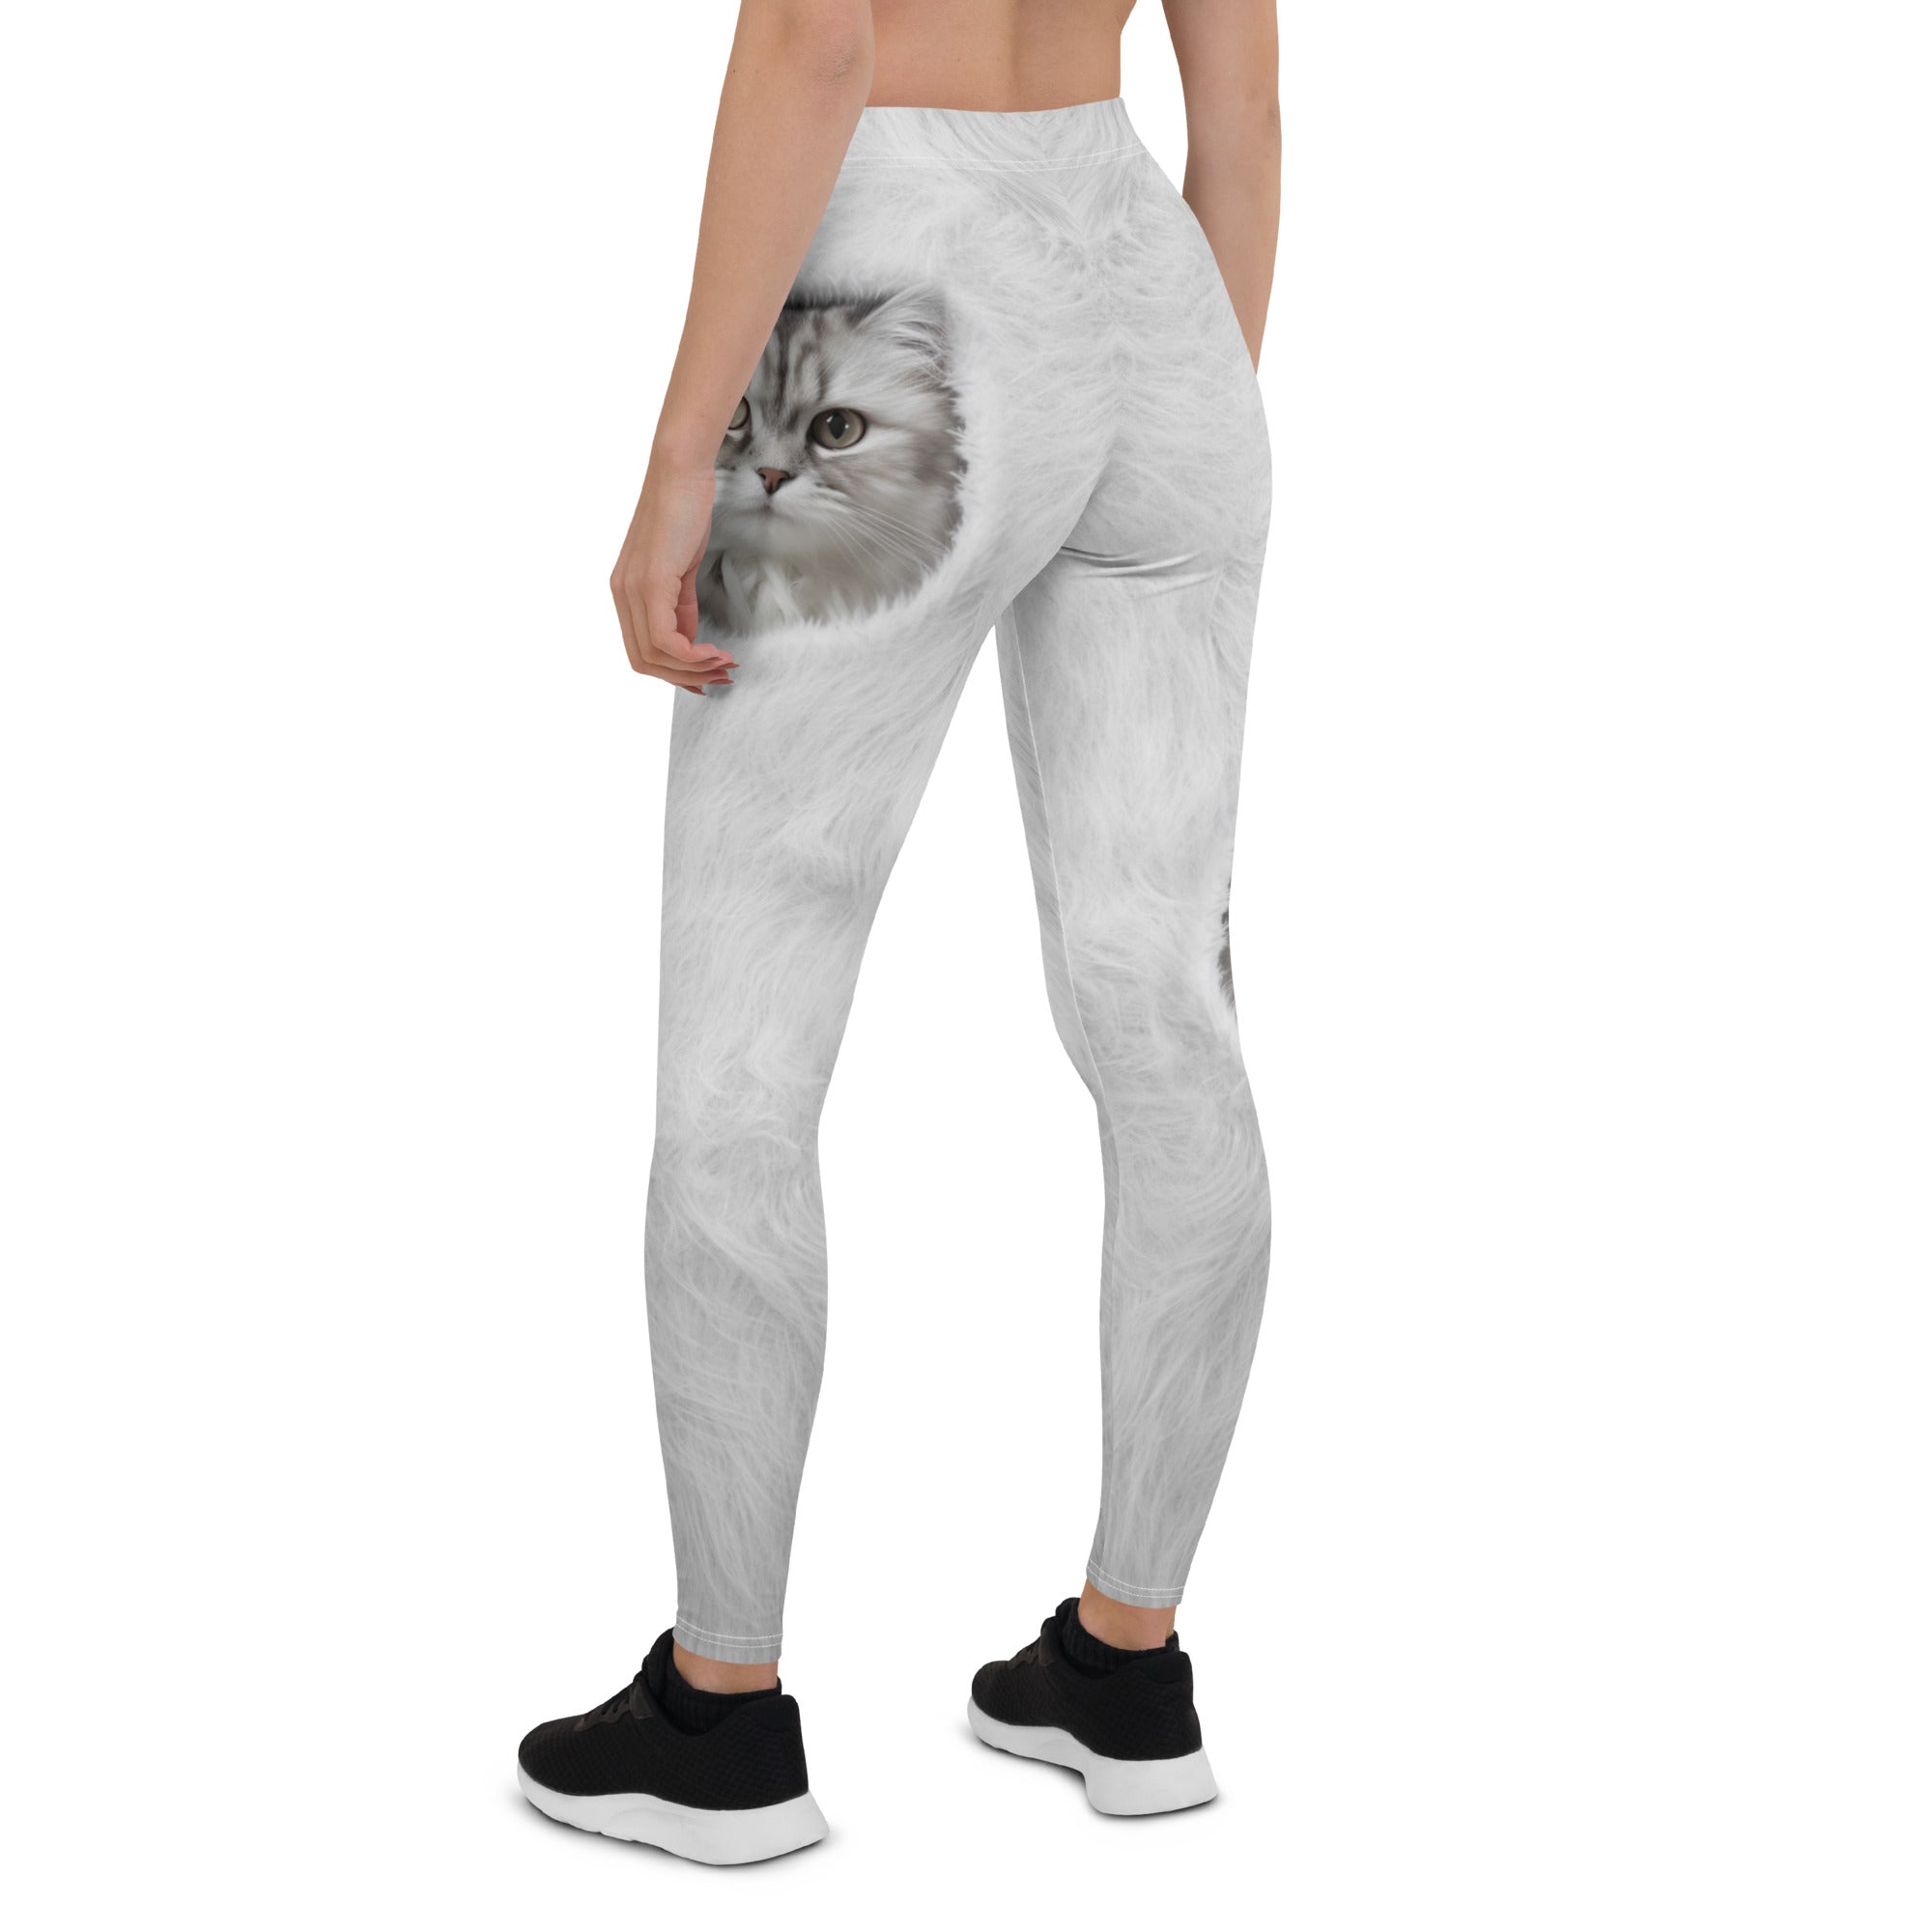 Cute Cats Cat Leggings Yoga Pants, Leggings for Women, Activewear Workout  Gym Running, Pattern Leggings, Cool Gift 